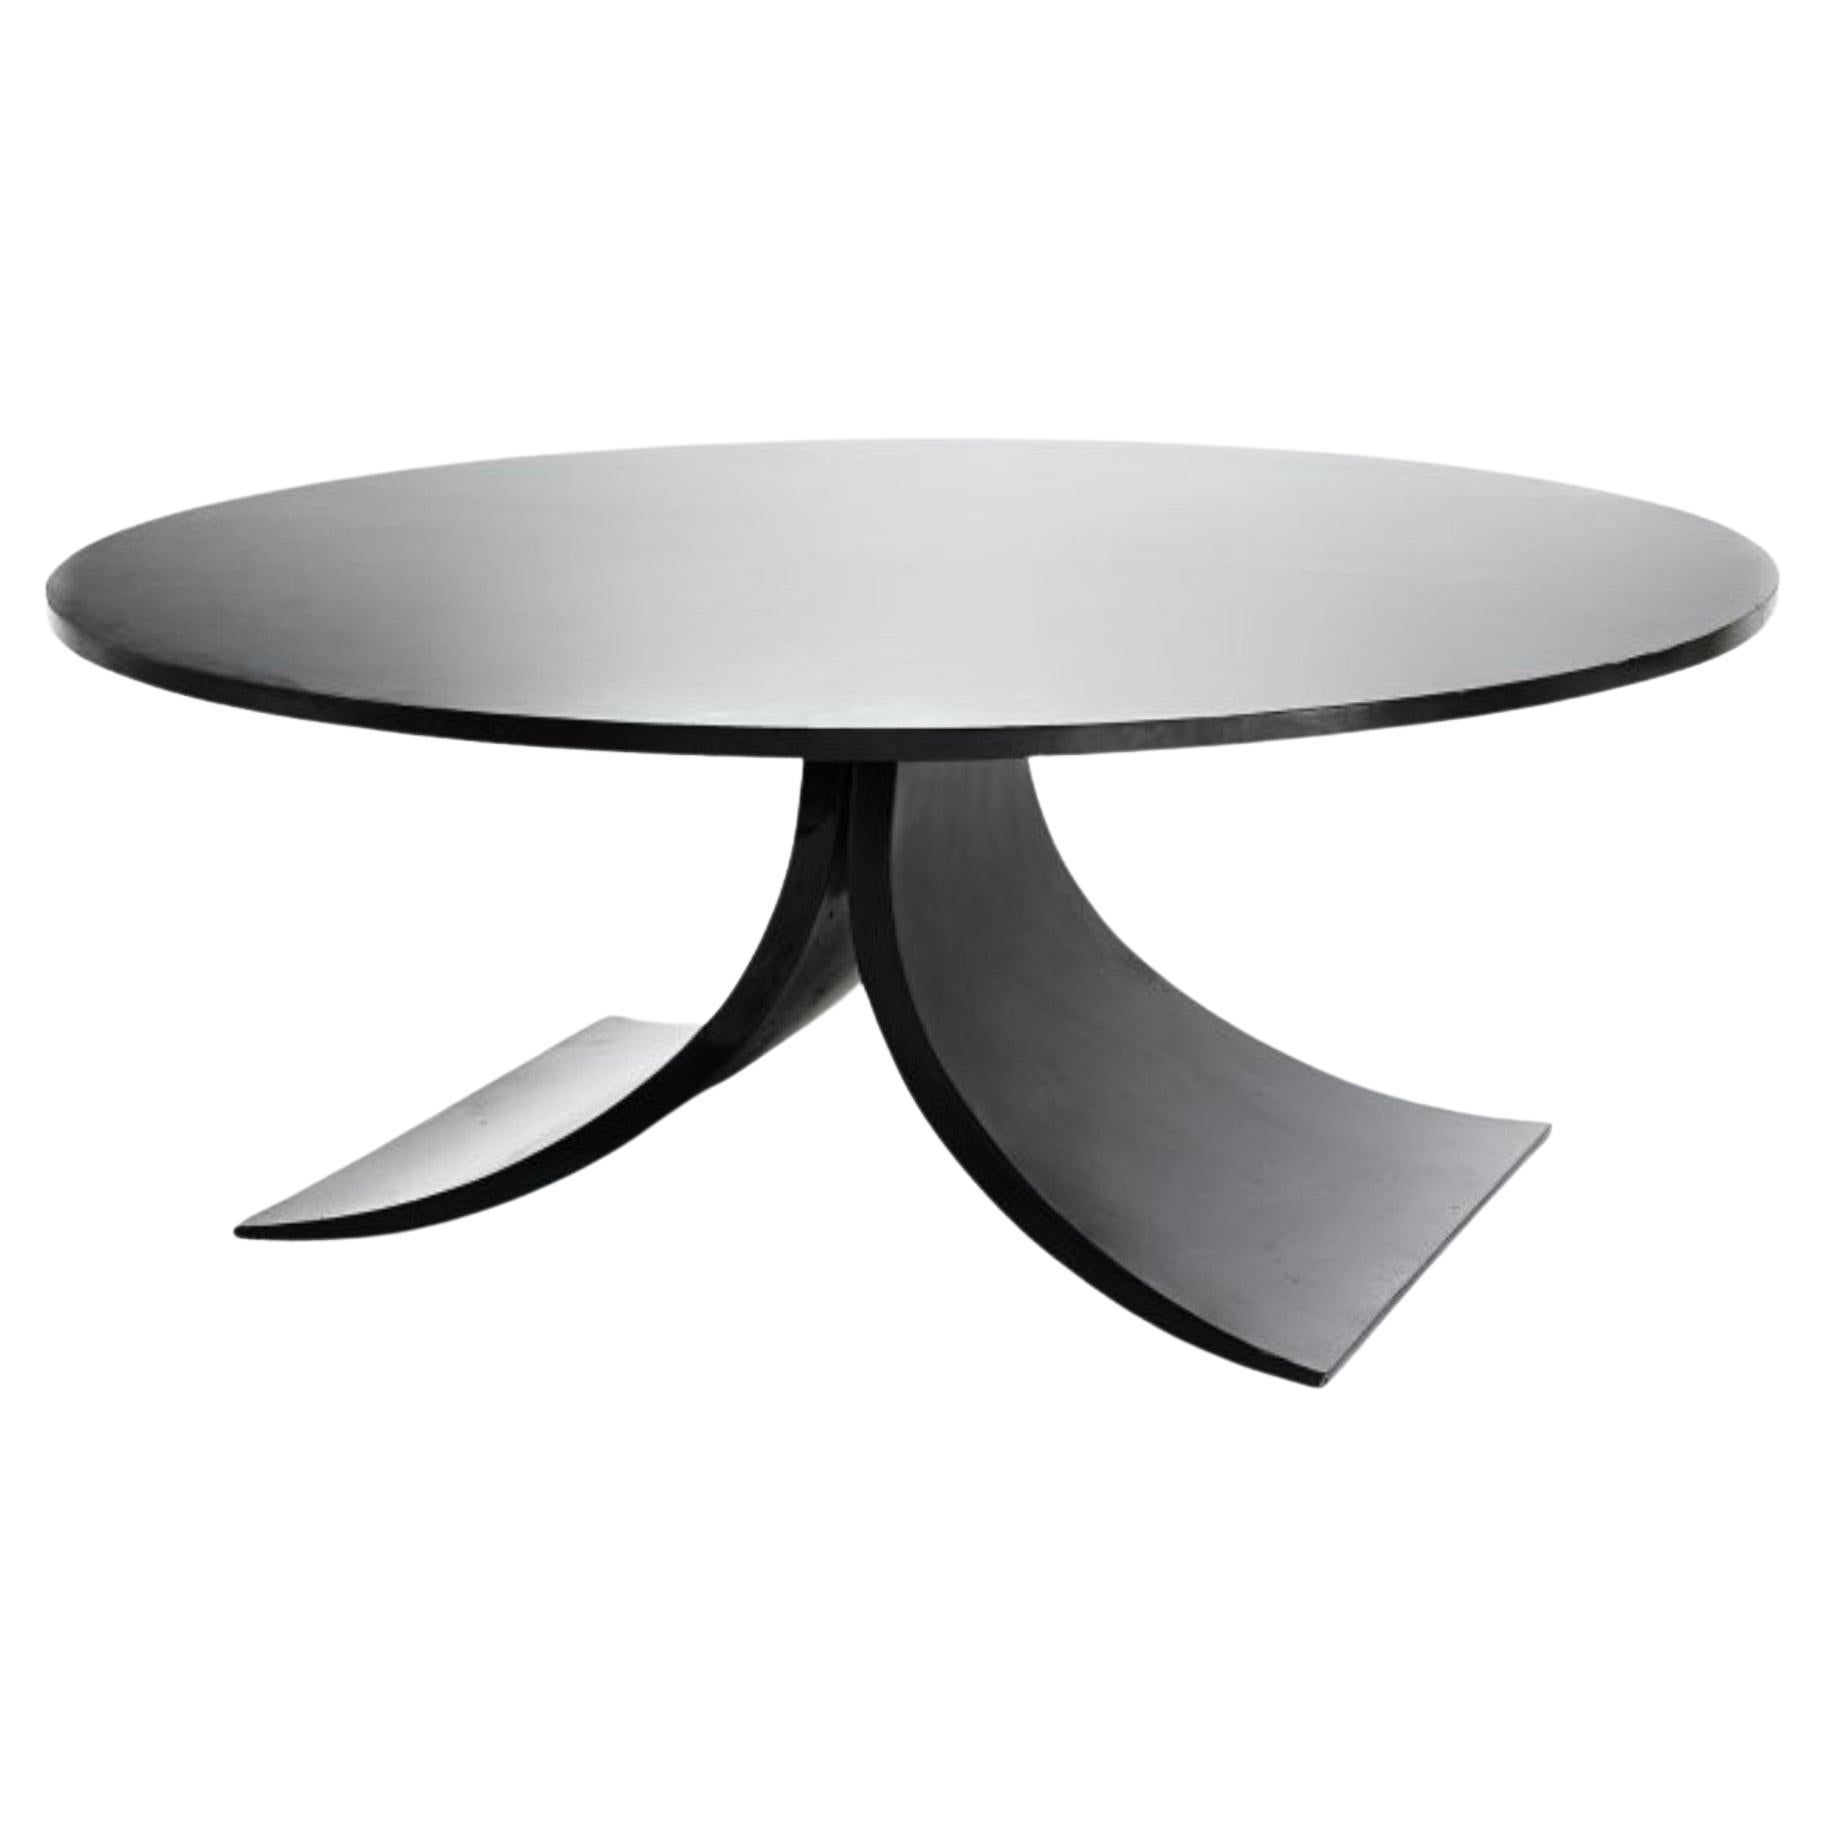 Dinning table model “Mesa redonda” by Oscar Niemeyer, Brazil, 1971 For Sale